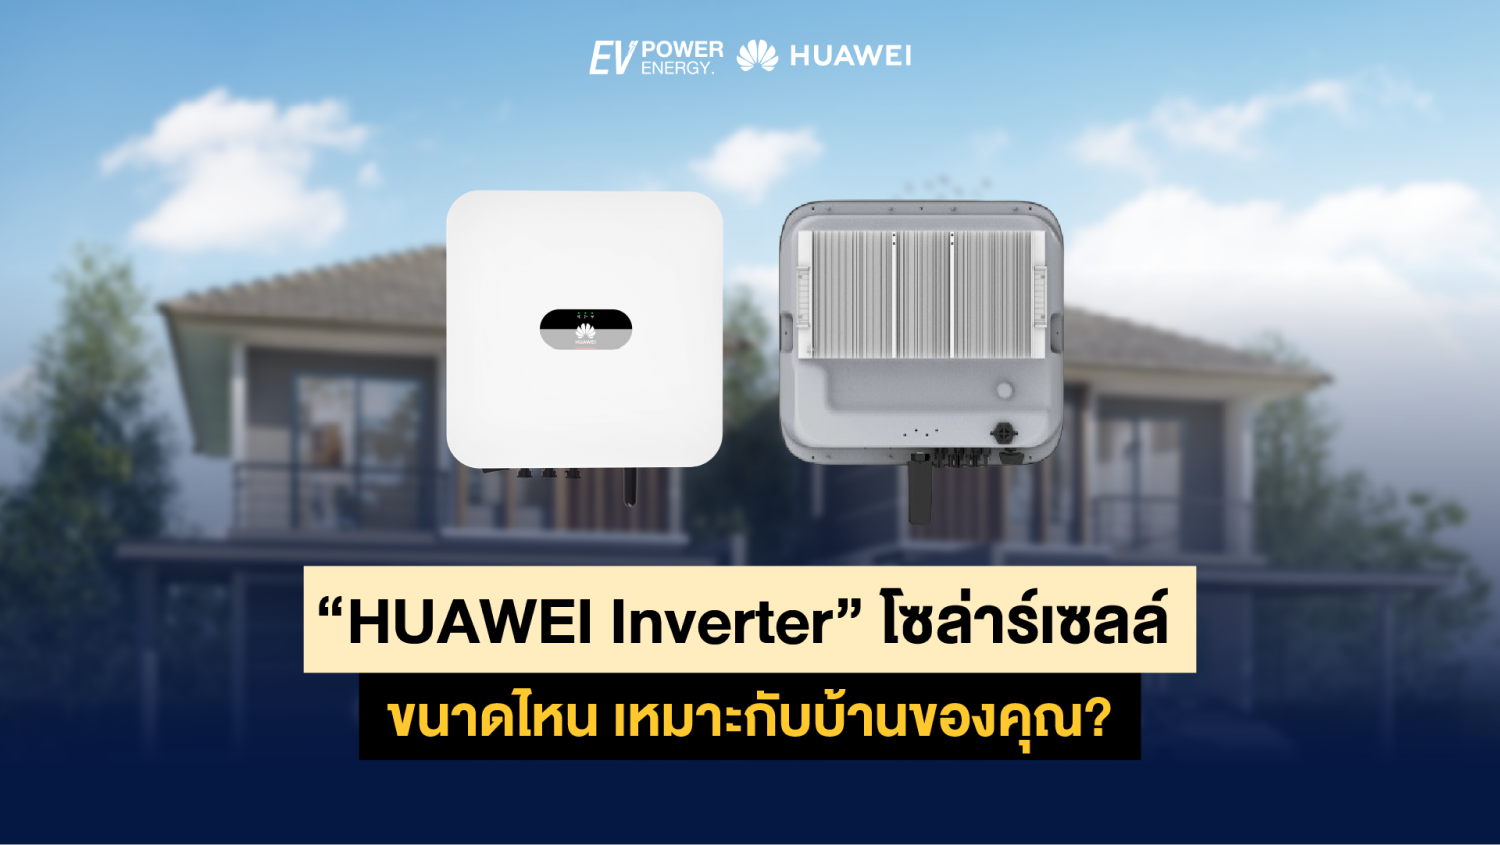 HUAWEI Inverter โซล่าร์เซลล์ ขนาดไหน เหมาะกับบ้านของคุณ